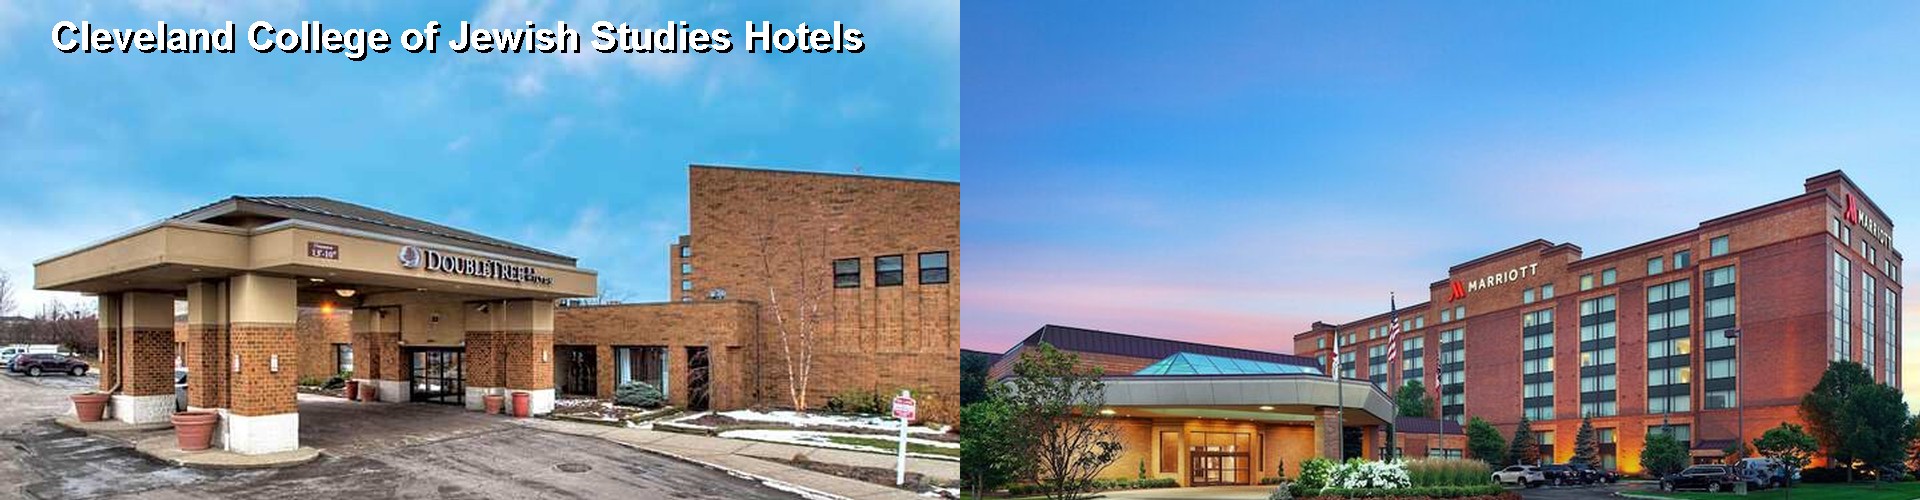 4 Best Hotels near Cleveland College of Jewish Studies